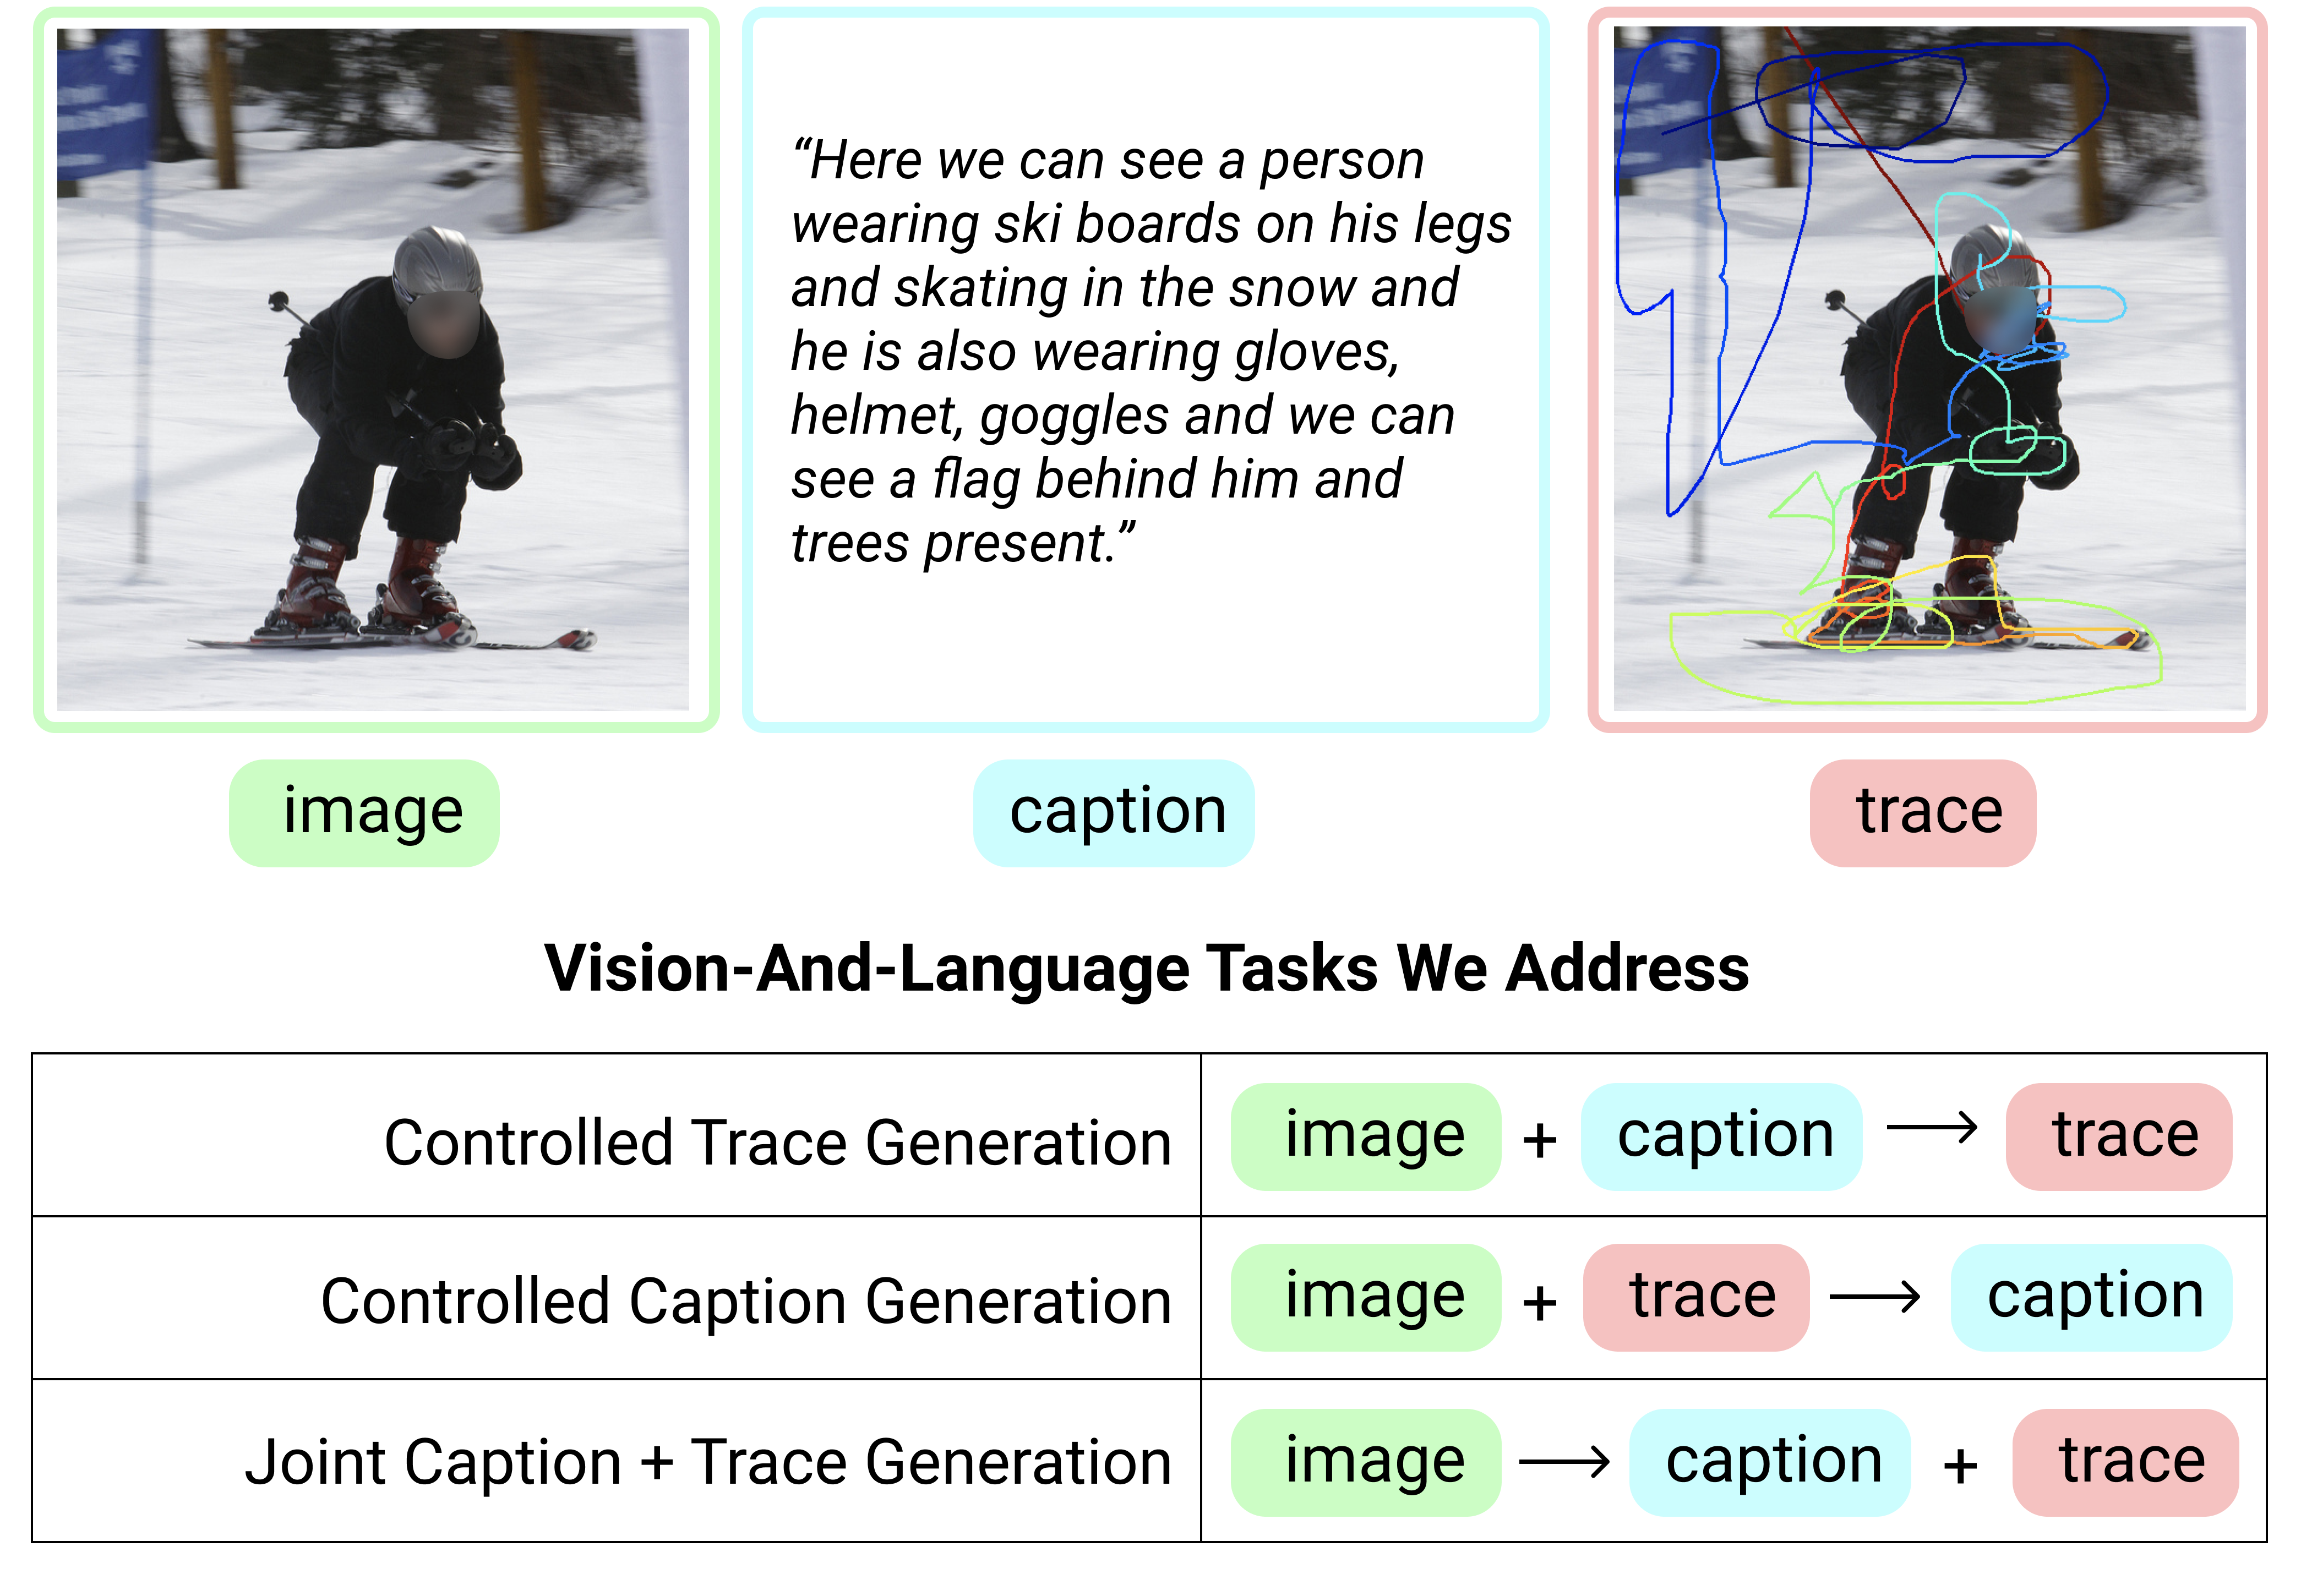 Three vision-and-language tasks